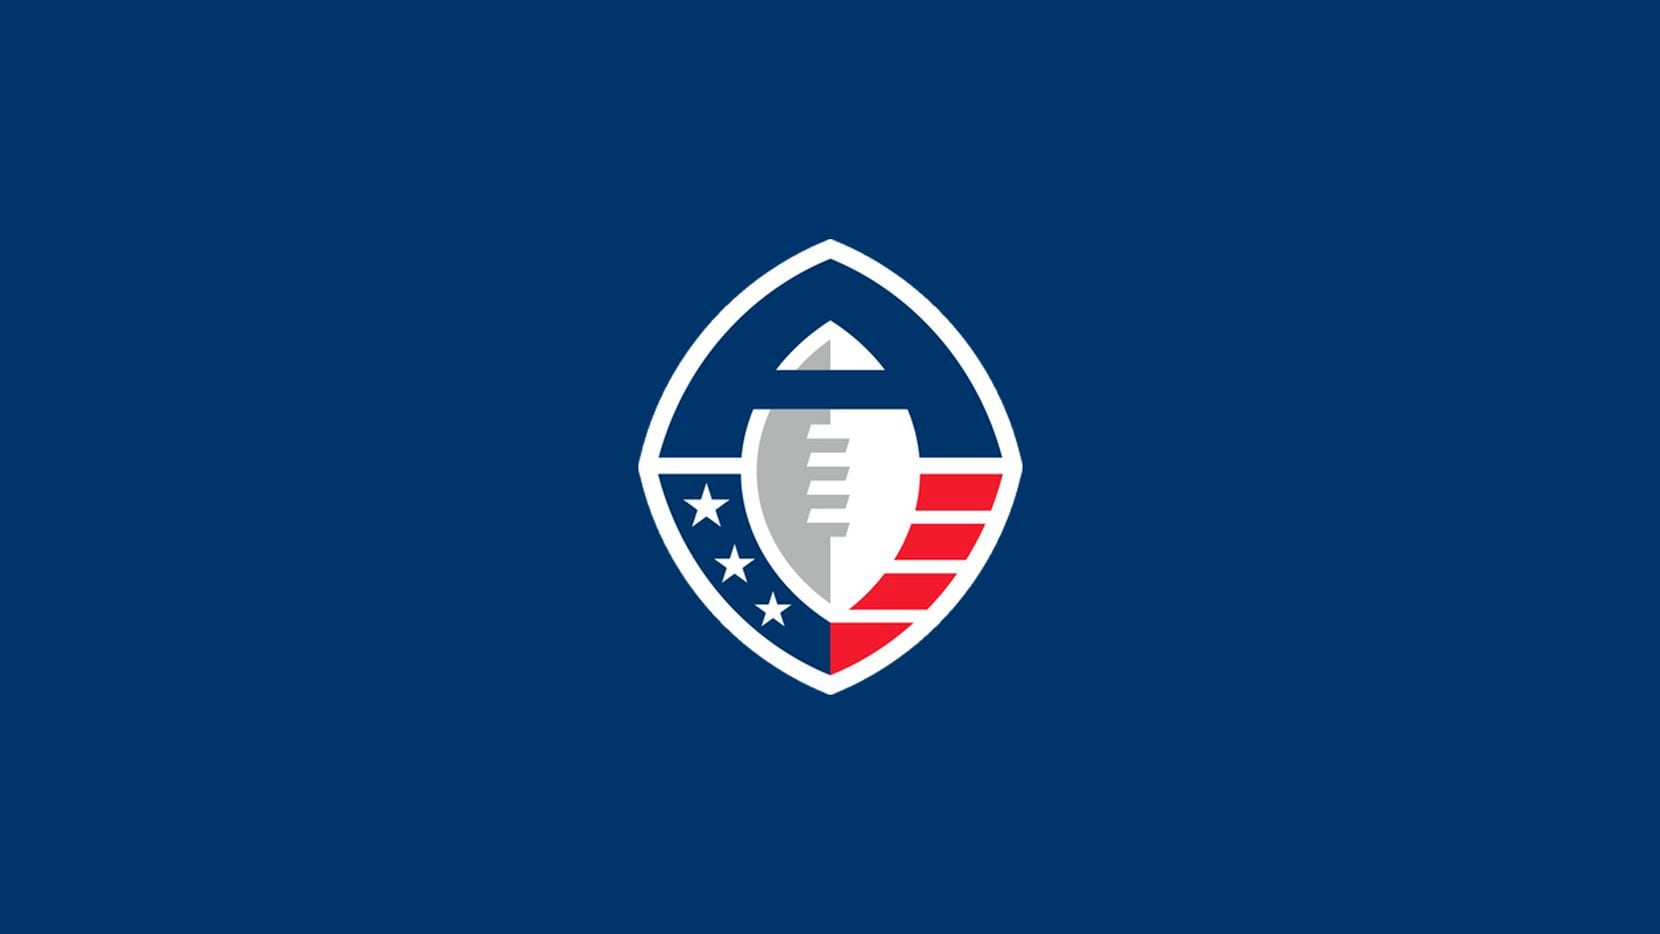 Alliance of American Football logo.